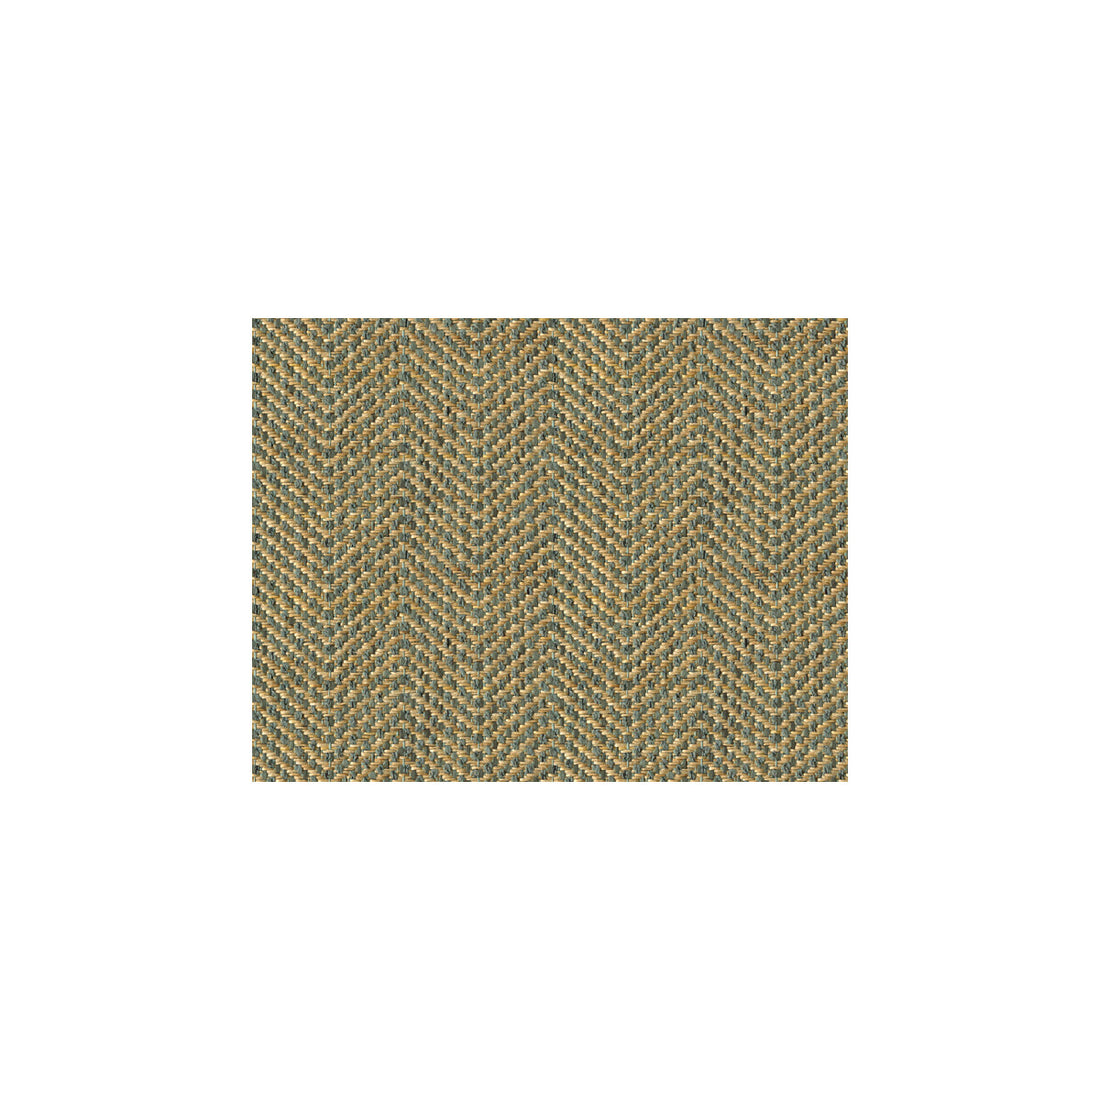 Kravet Smart fabric in 31748-1615 color - pattern 31748.1615.0 - by Kravet Smart